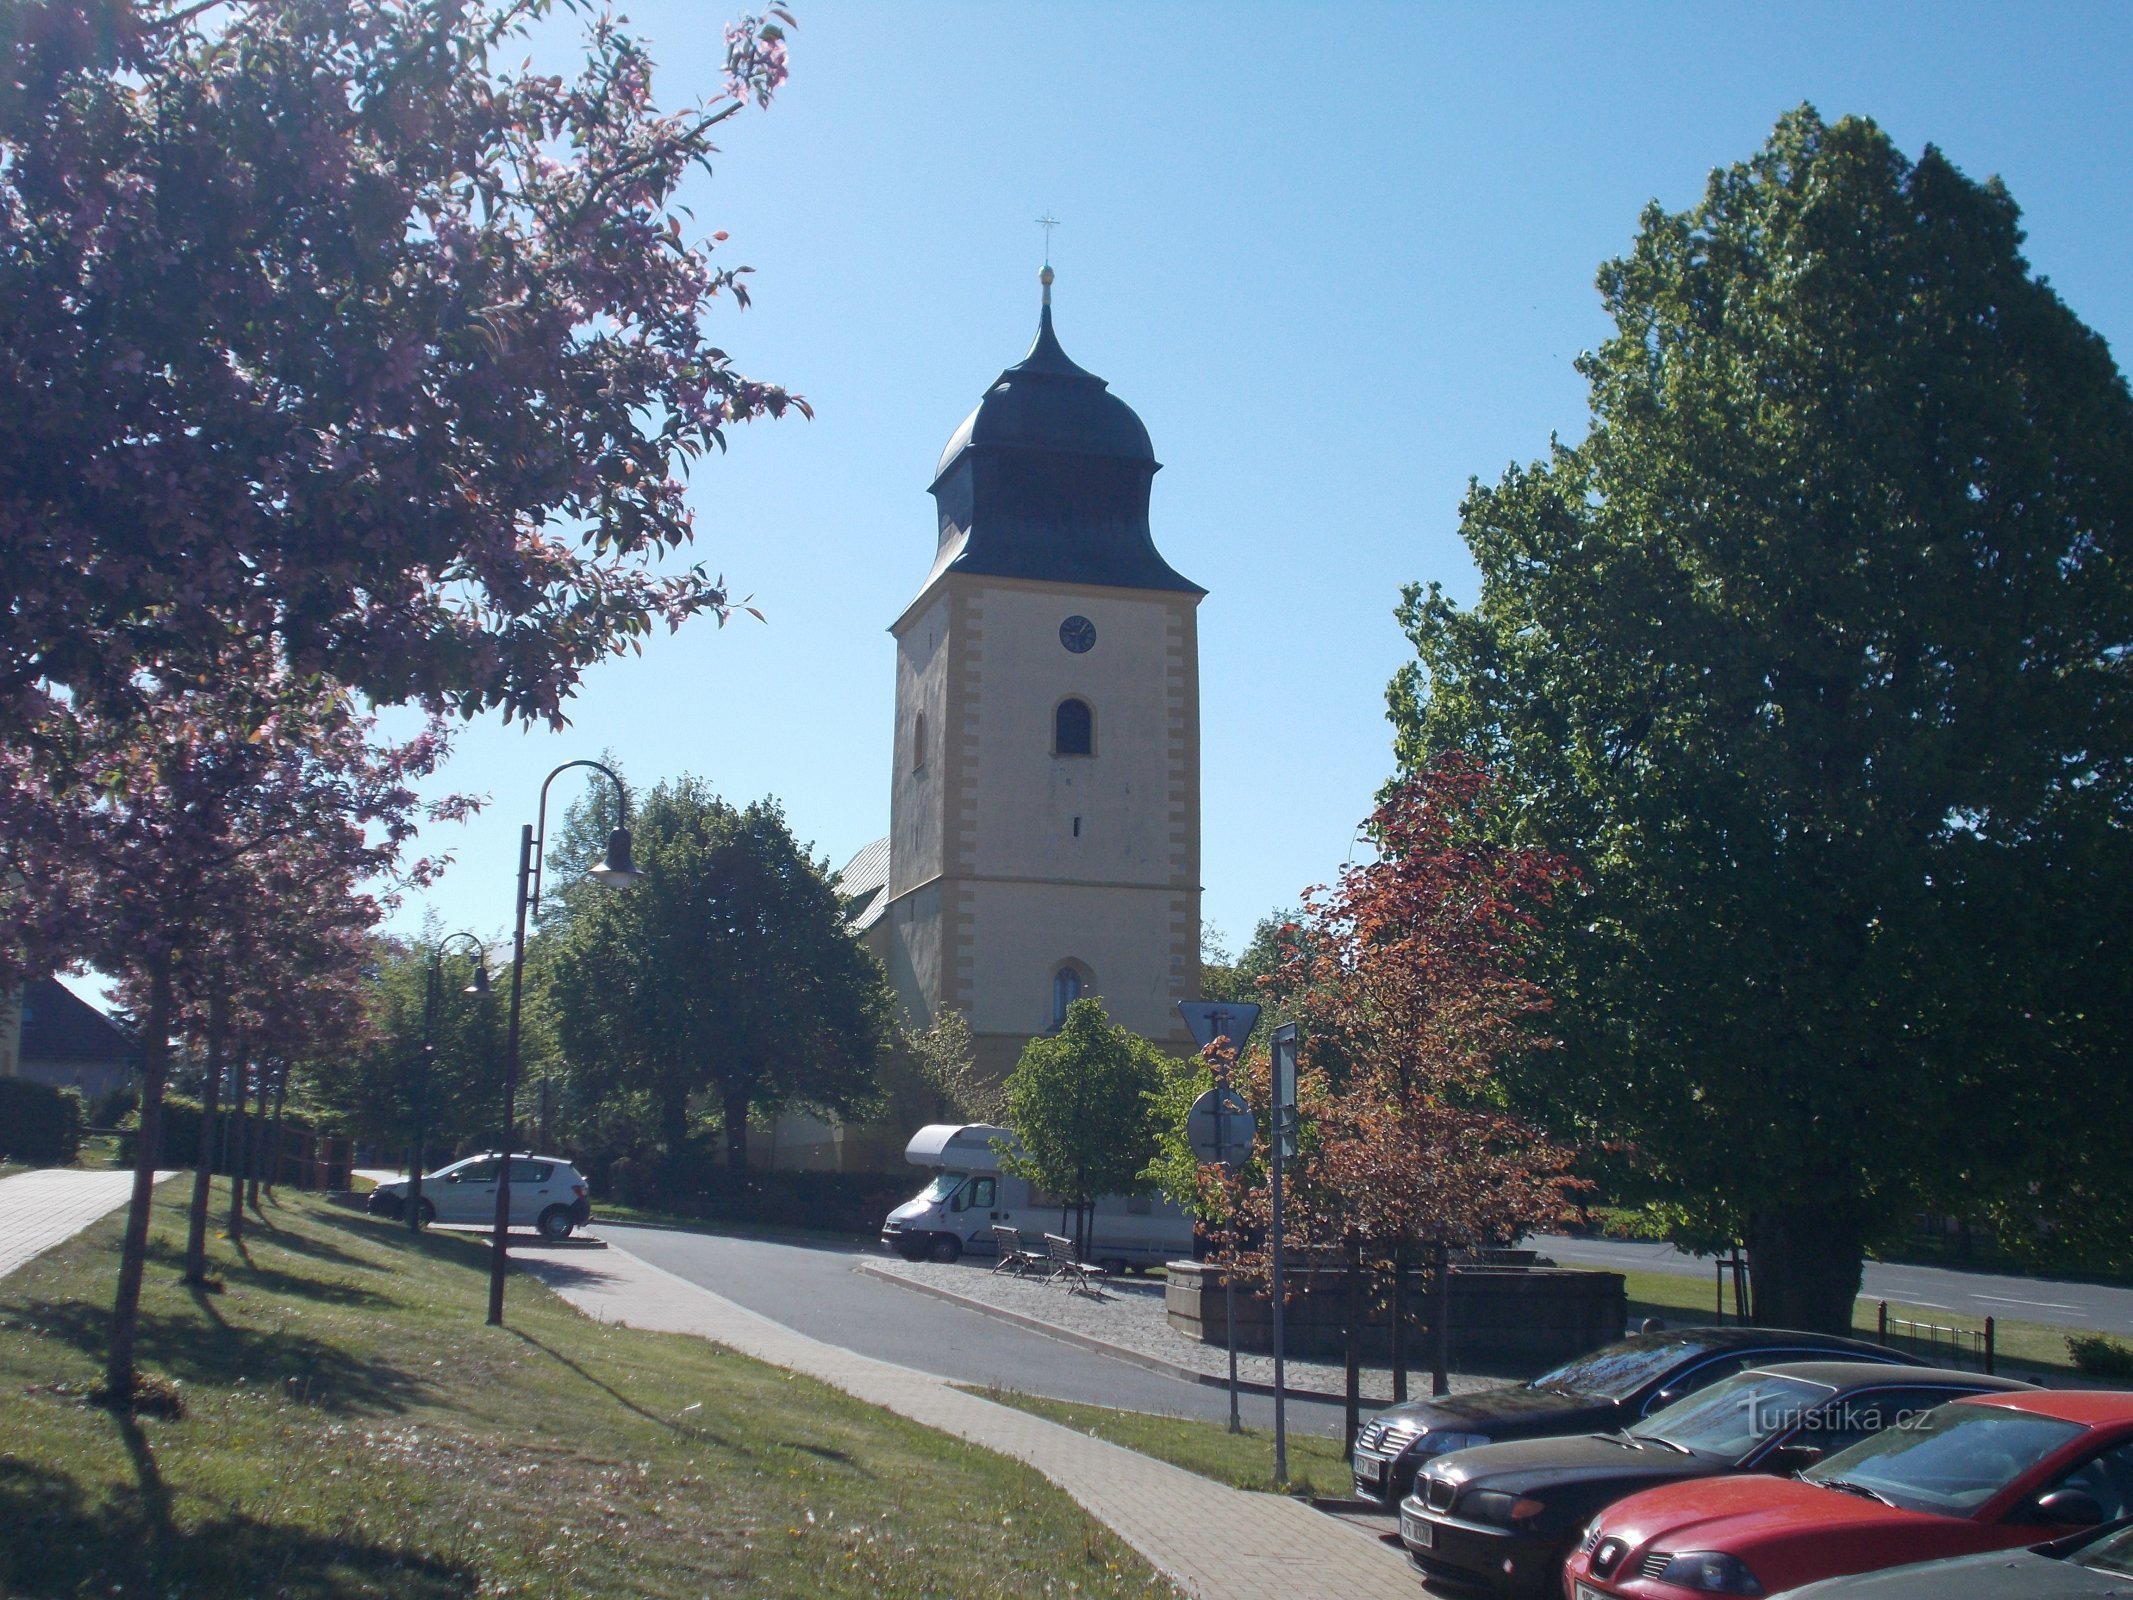 Přímda, plaza con la iglesia de St. Jorge